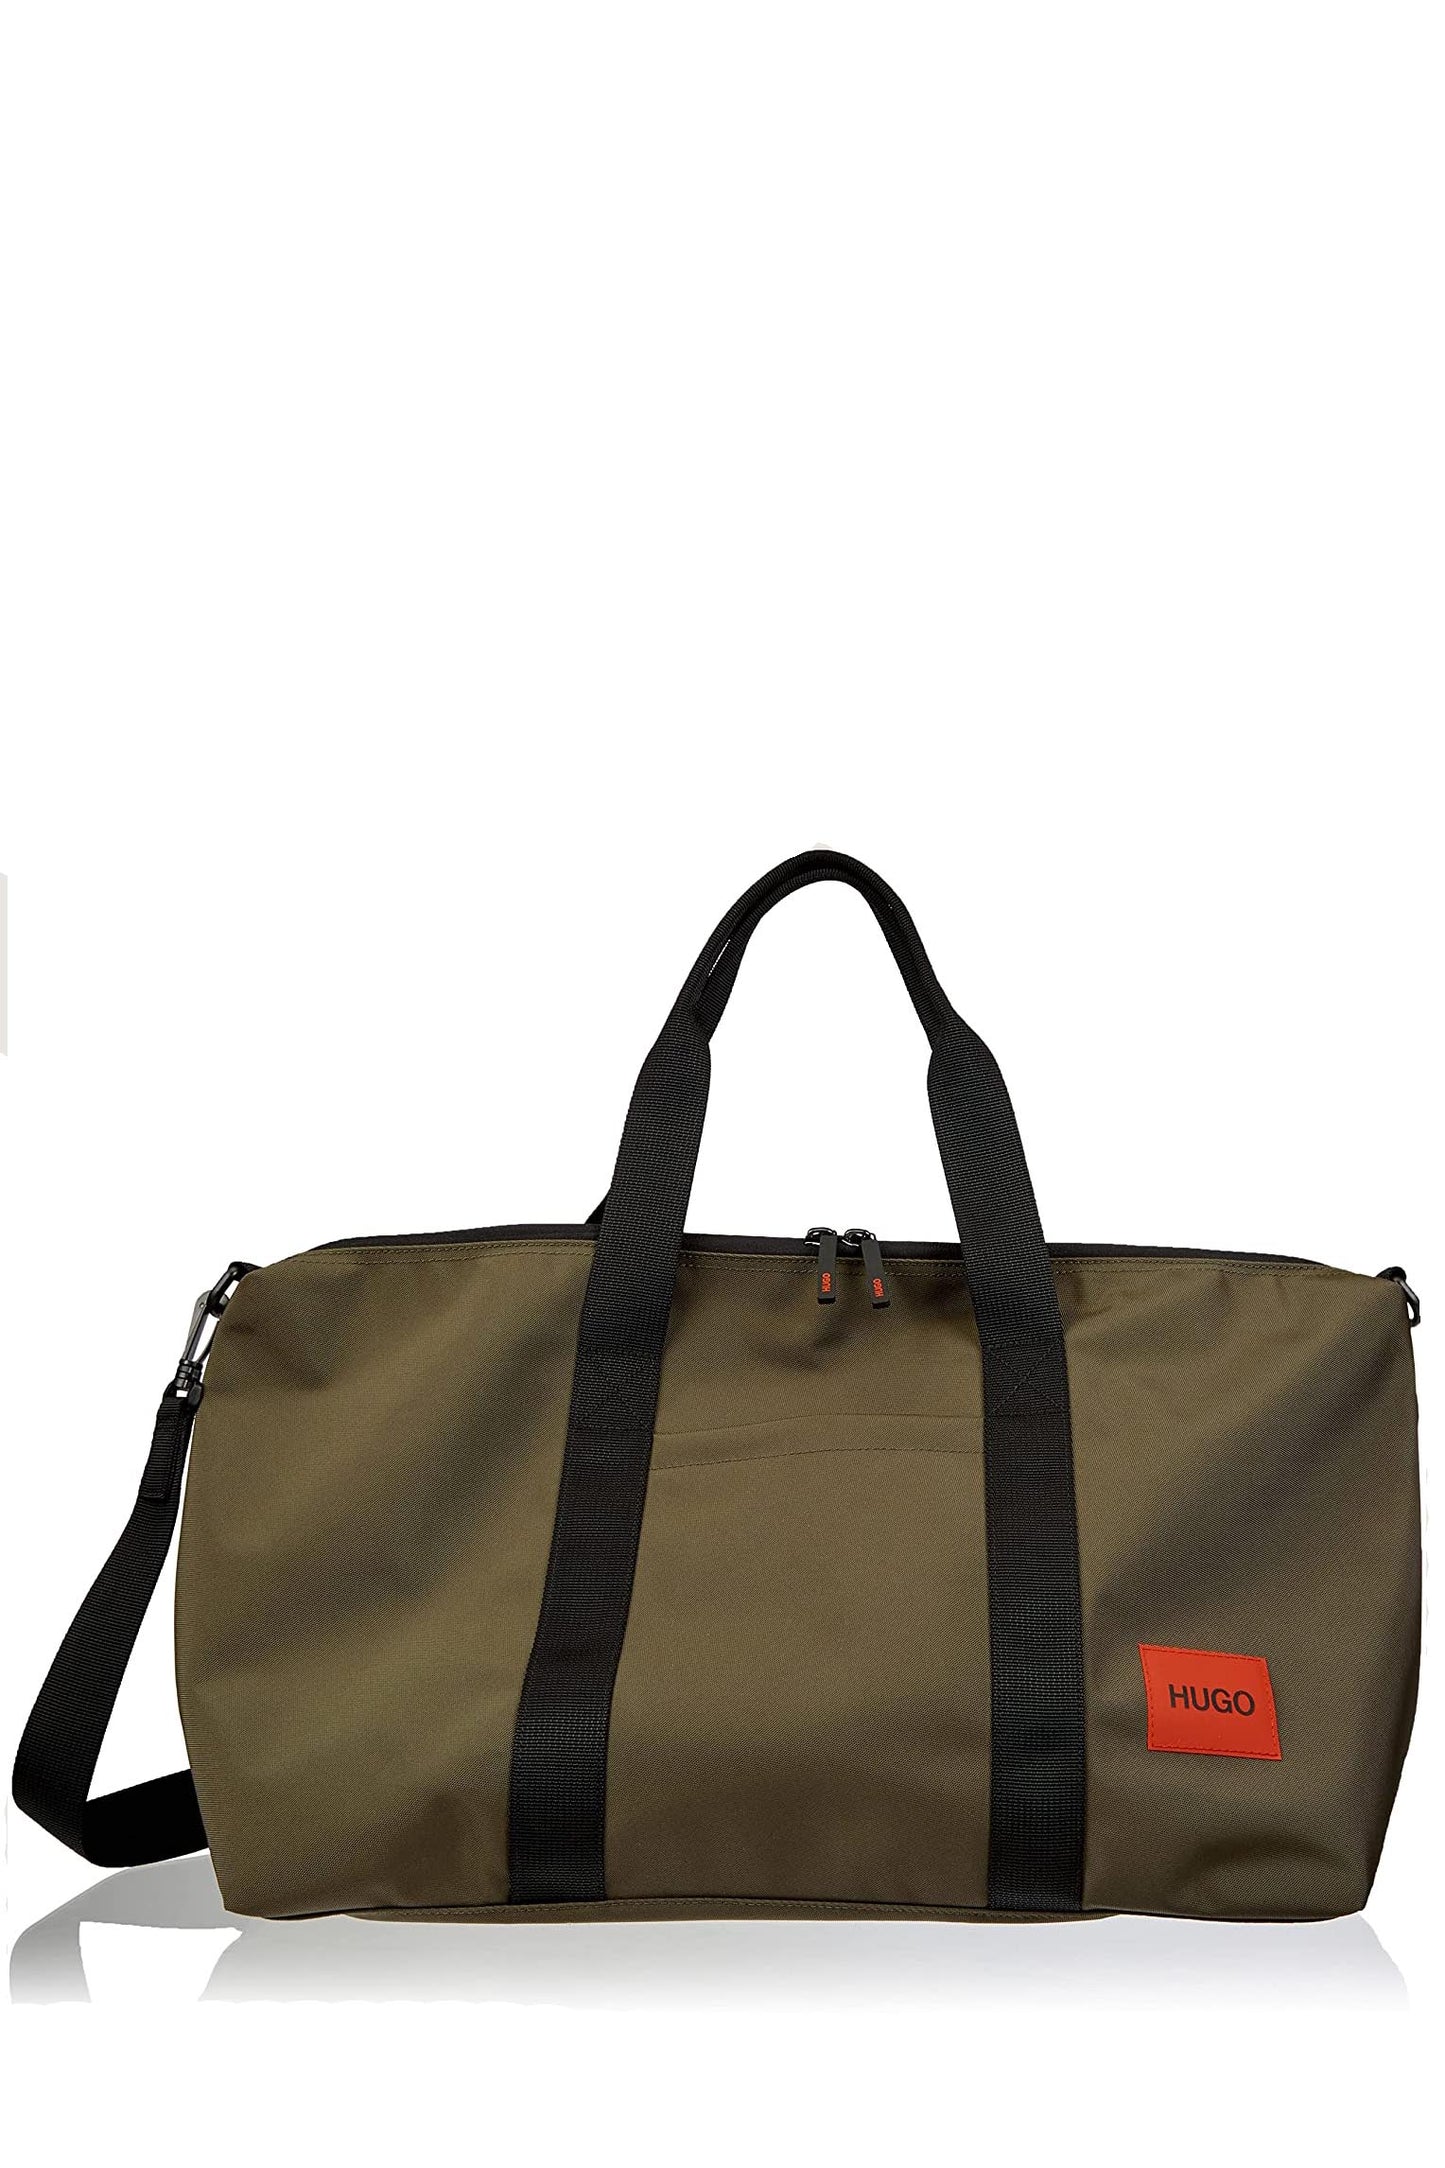 Ethon Large Hugo Boss Bag in Beige color (Boss-50456691-273)